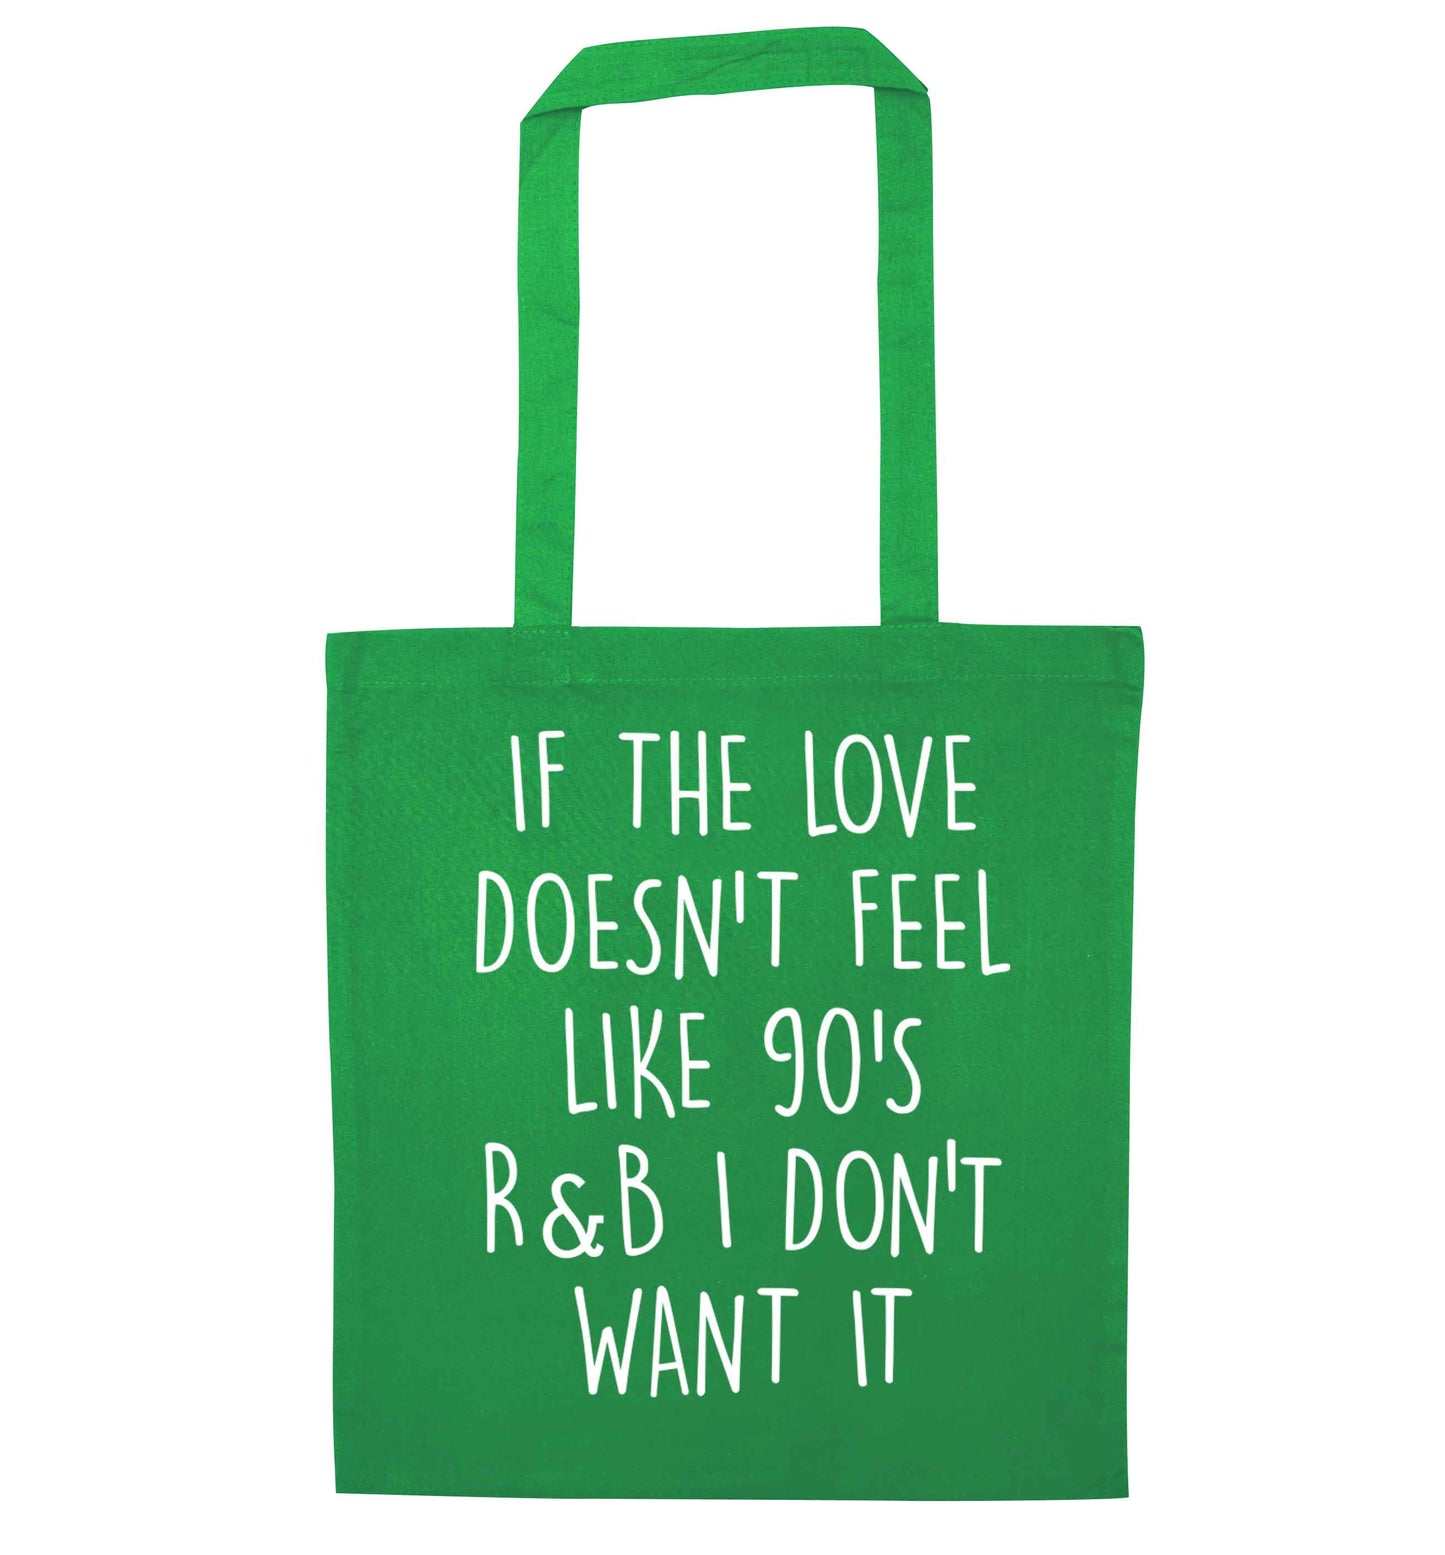 If the love doesn't feel like 90's r&b I don't want it green tote bag